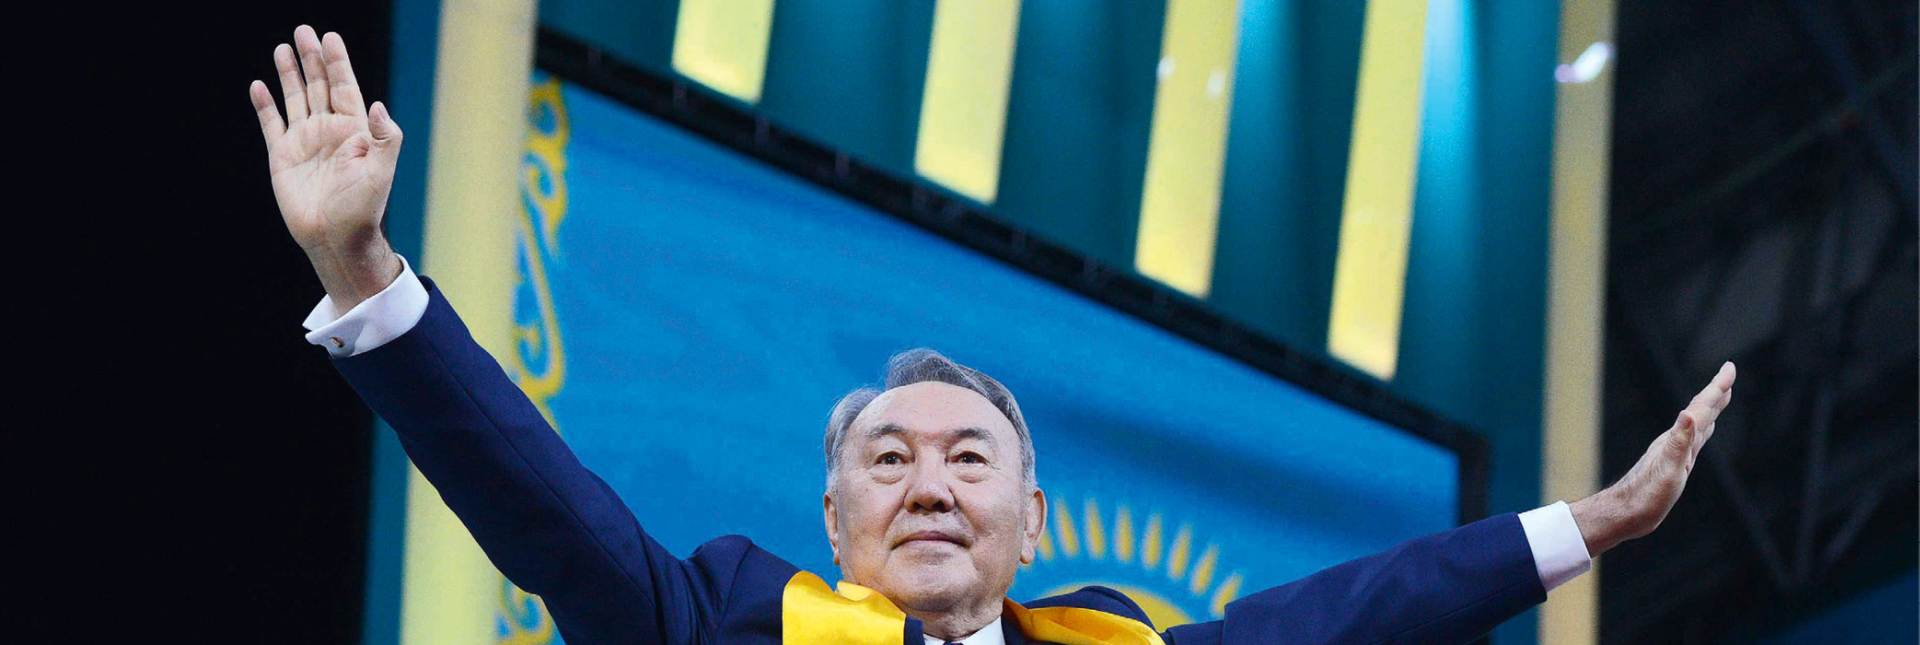 FC Astana u Ligi prvaka po želji kazahstanskog apsolutista Nursultana Nazarbajeva